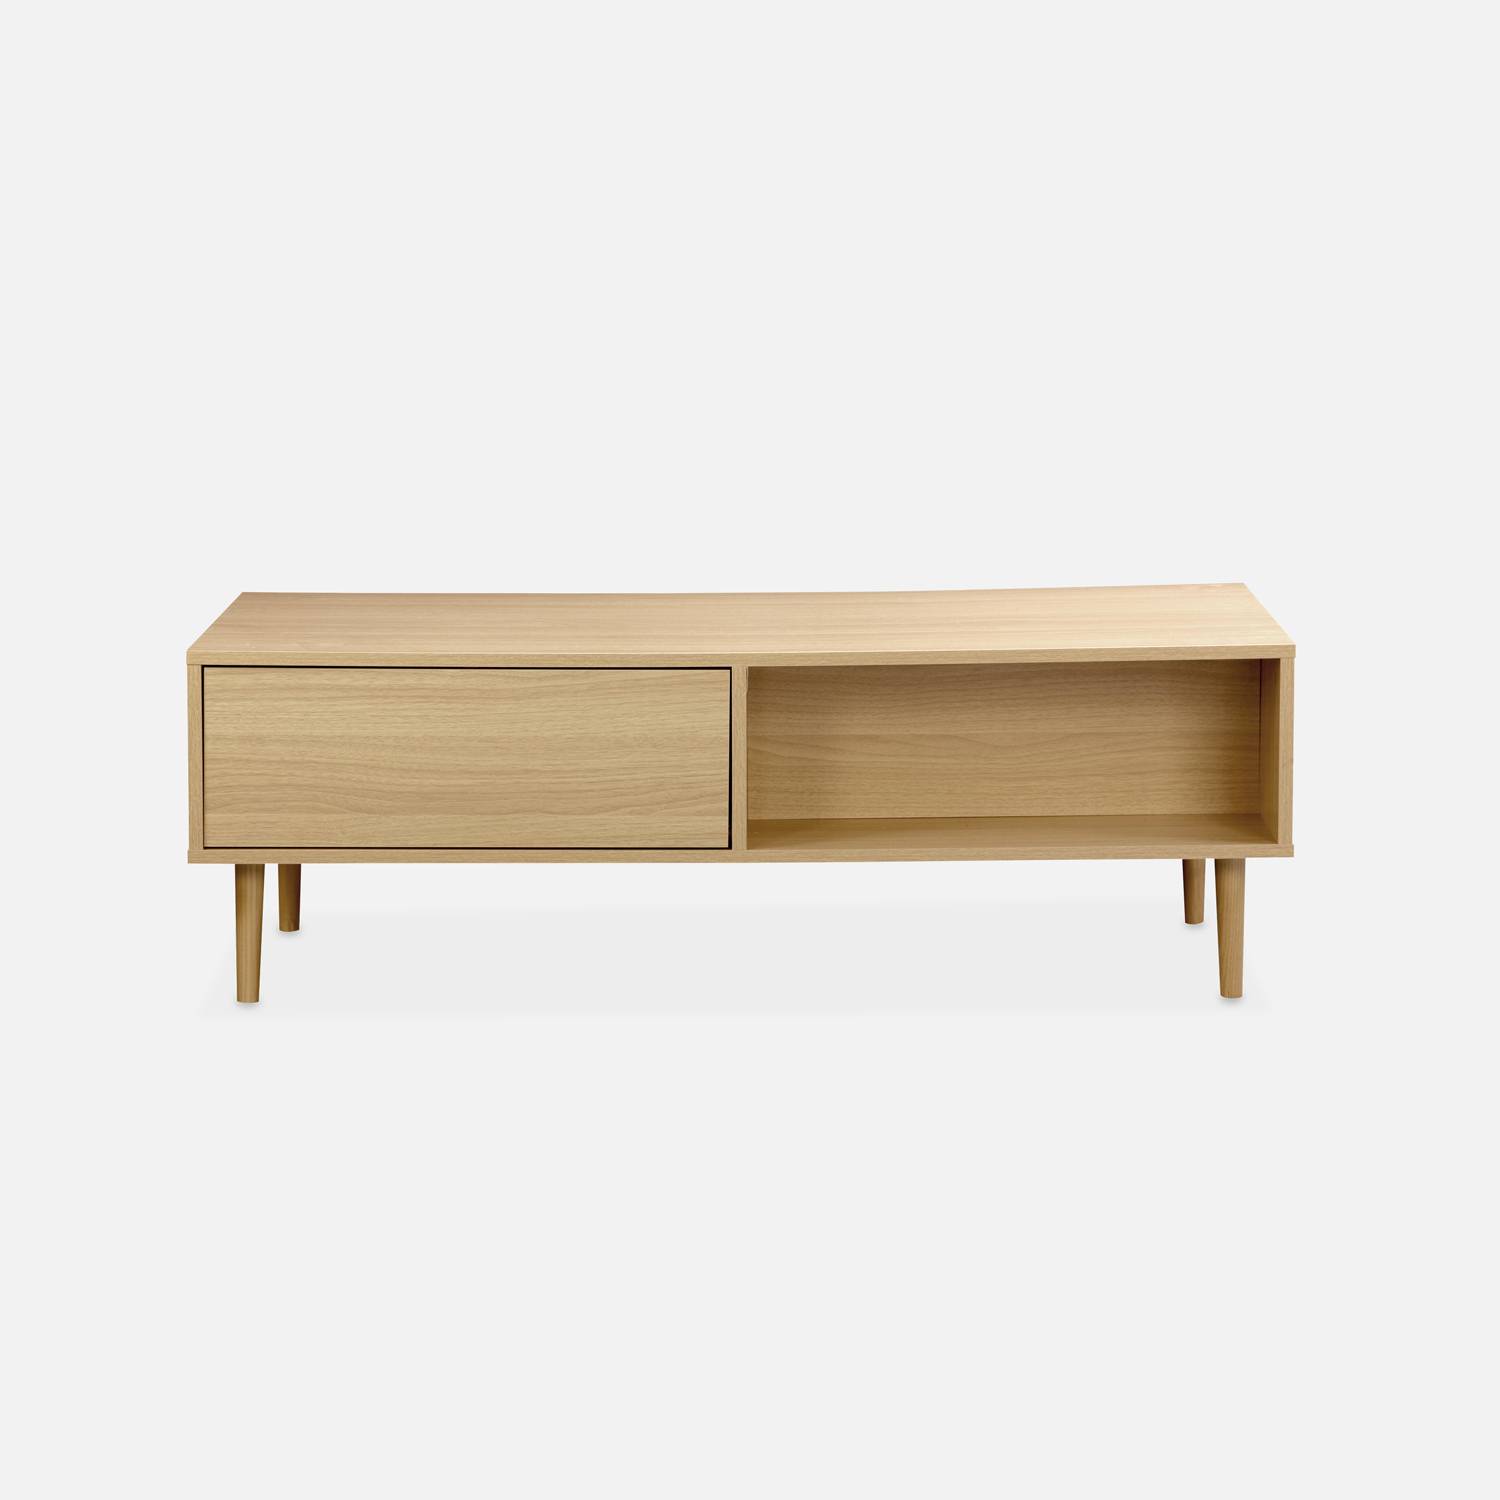 Wood-effect coffee table, 120x55x40cm, Mika, Natural wood colour,sweeek,Photo5